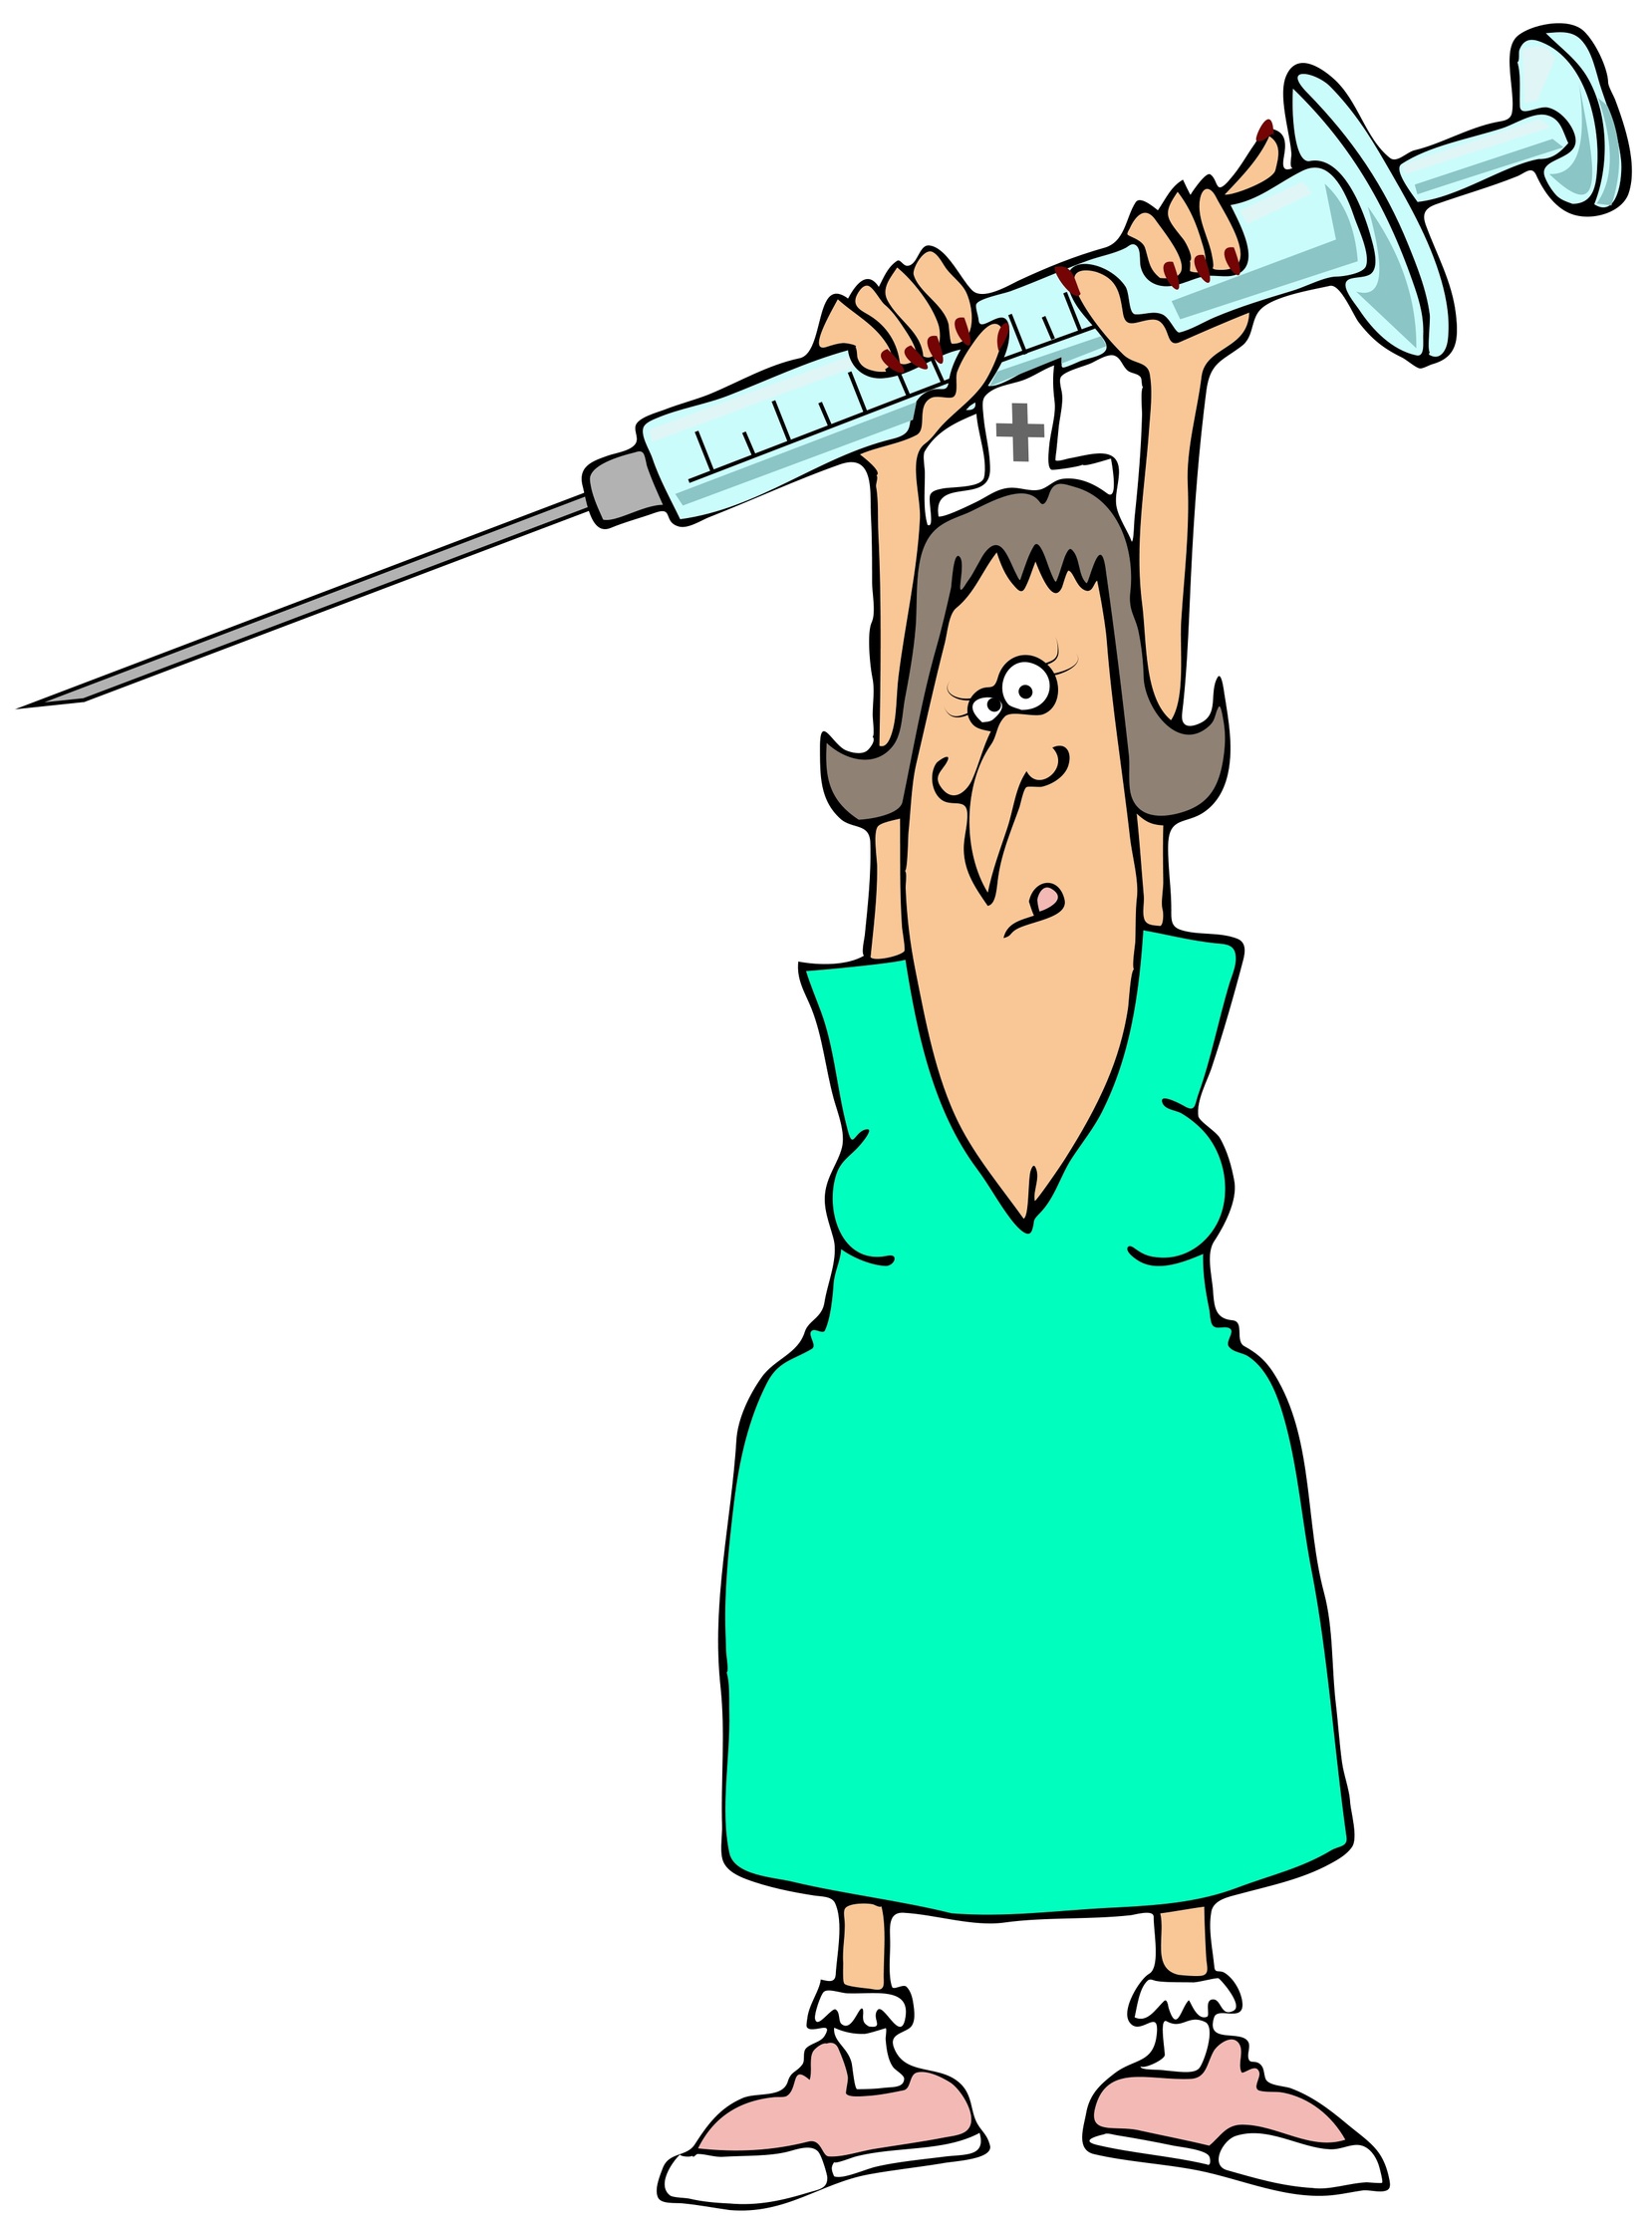 Free Nursing Cartoon Images, Download Free Nursing Cartoon Images png  images, Free ClipArts on Clipart Library